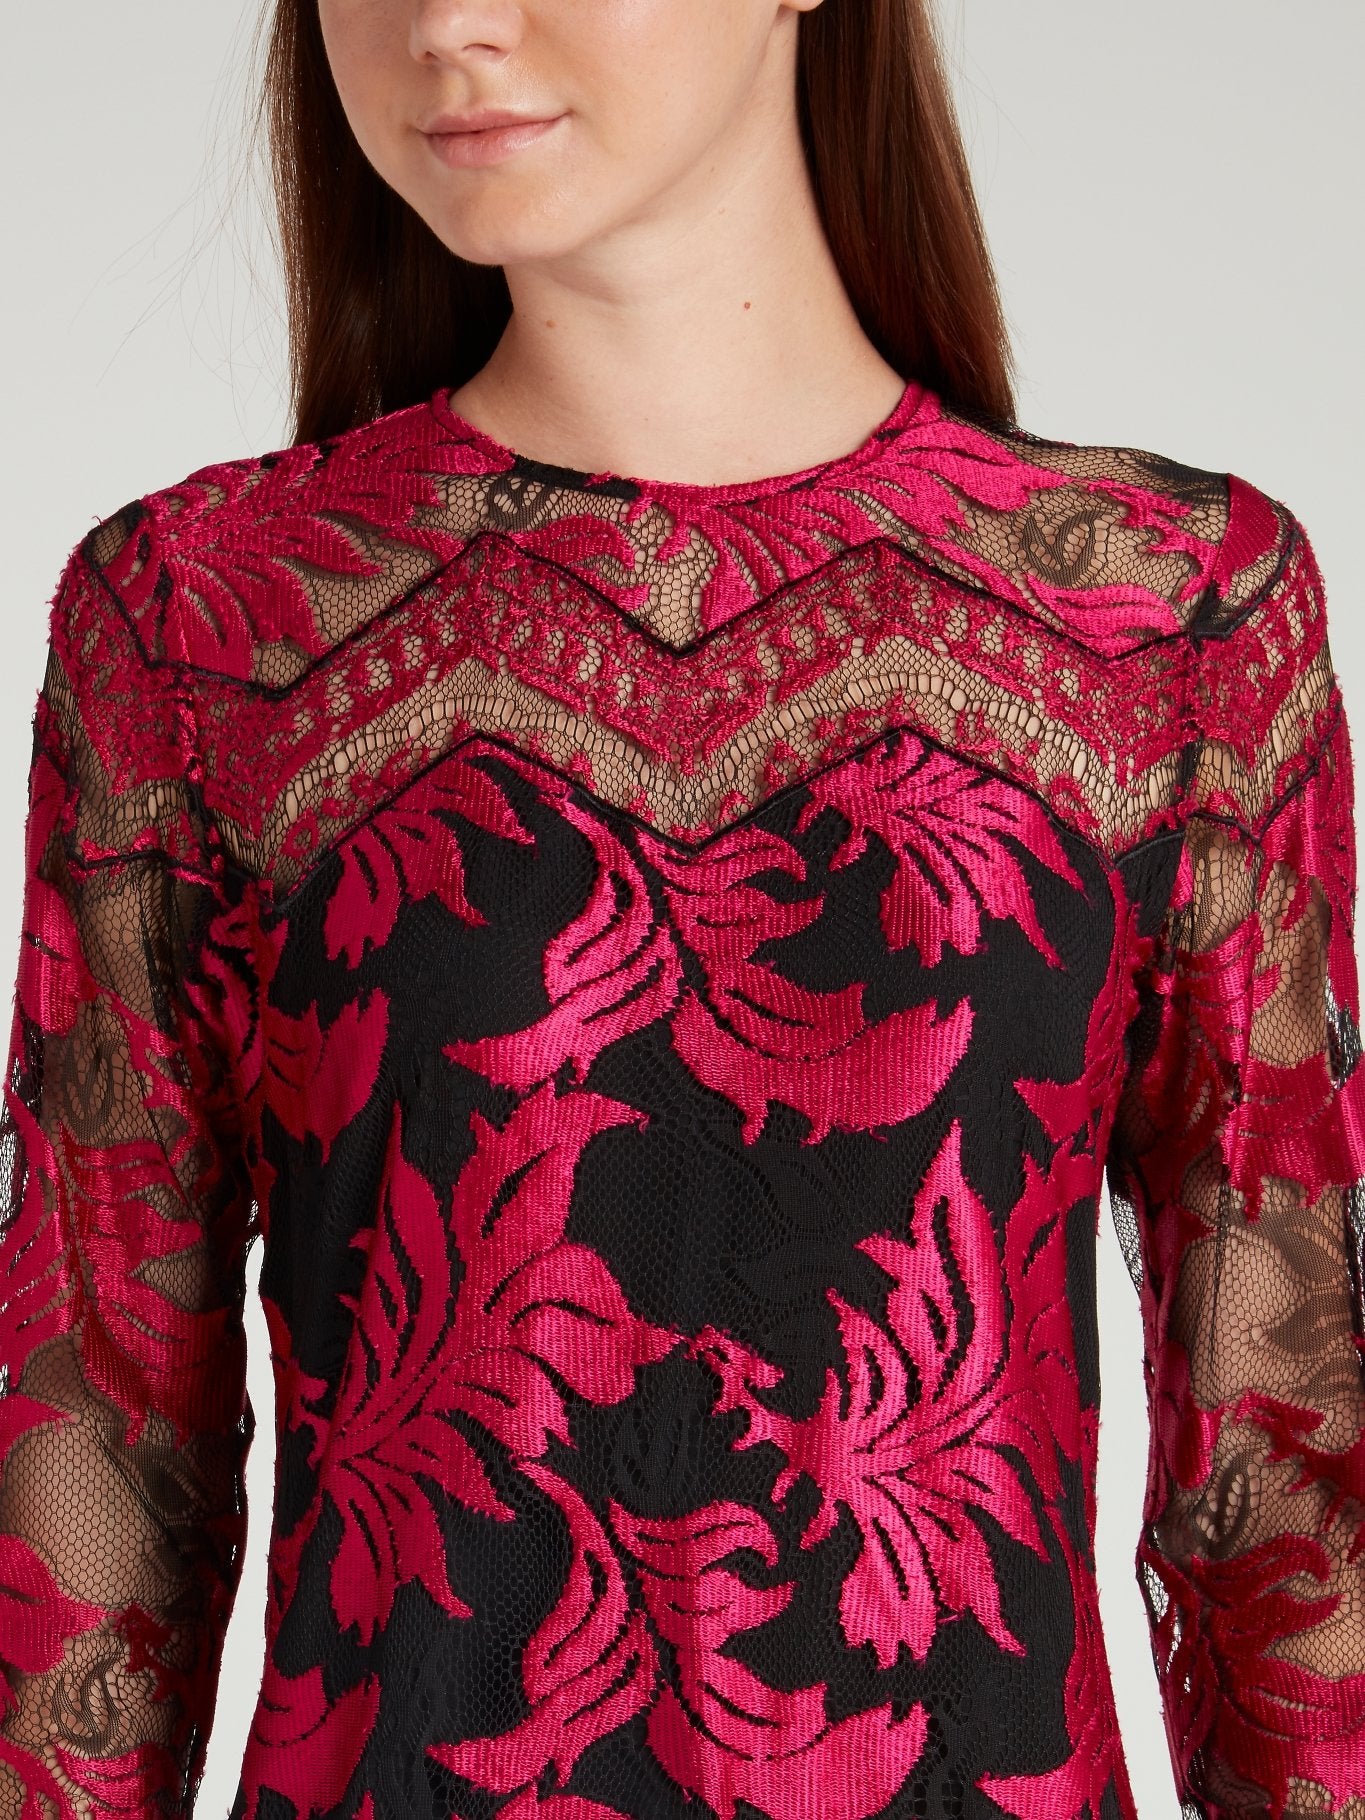 Fuchsia Embroidered Lace Dress